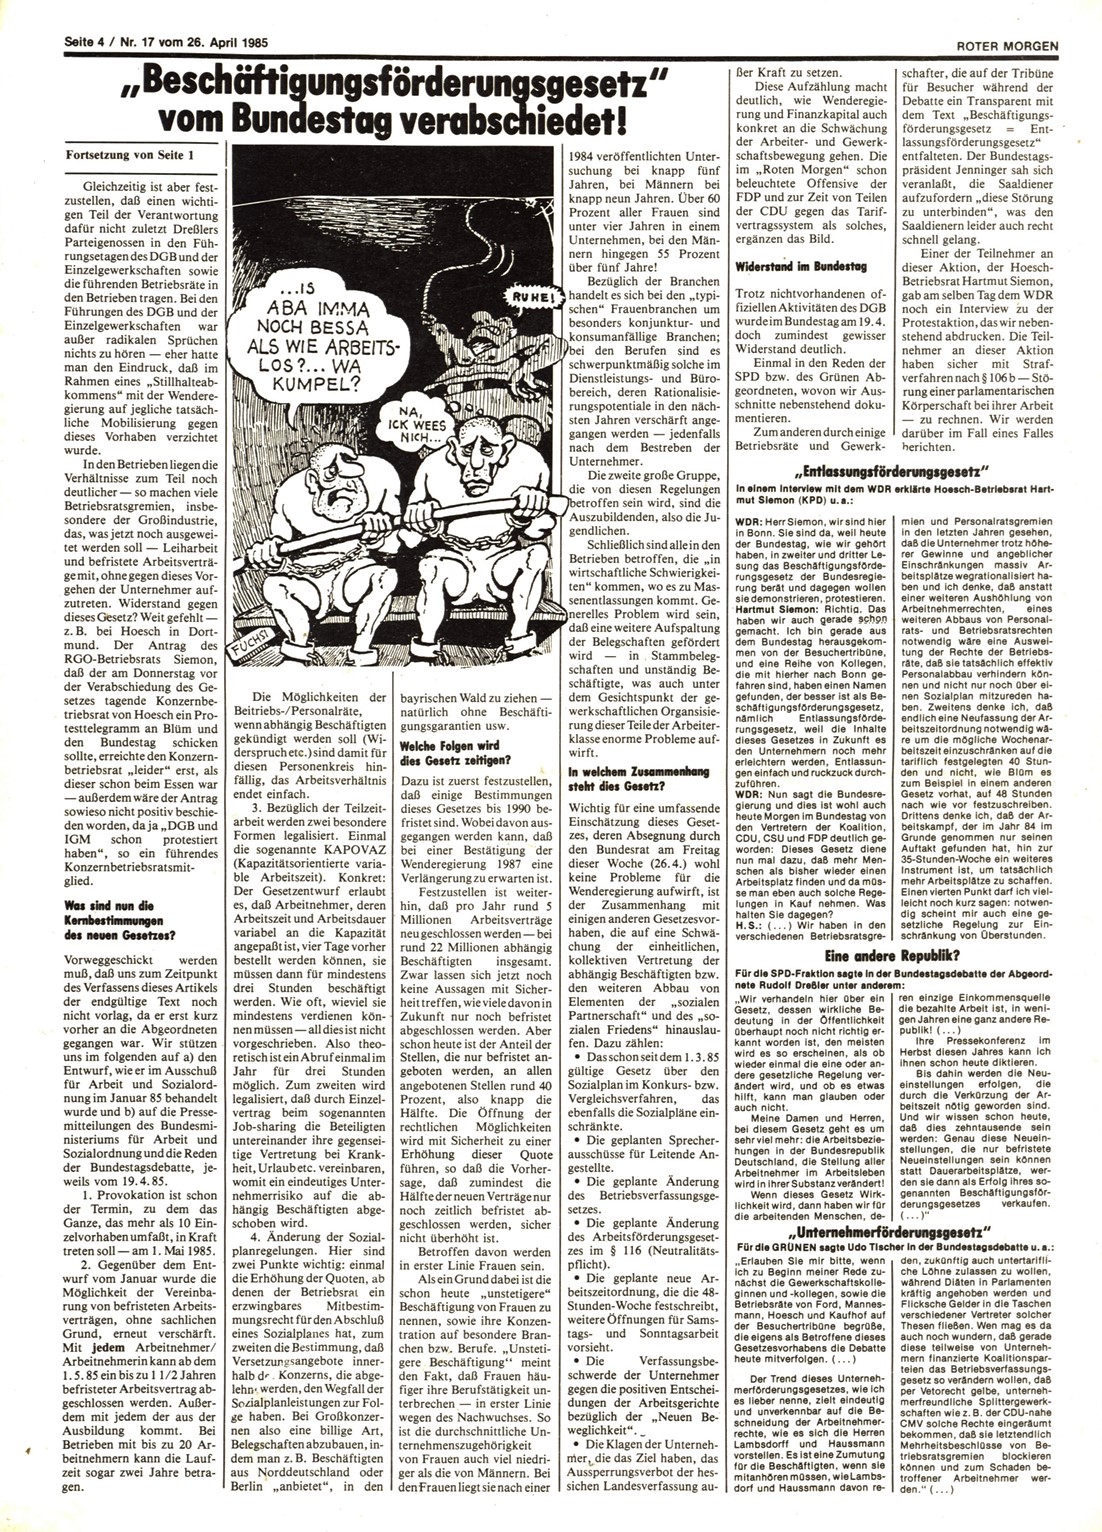 Roter Morgen, 19. Jg., 26. April 1985, Nr. 17, Seite 4